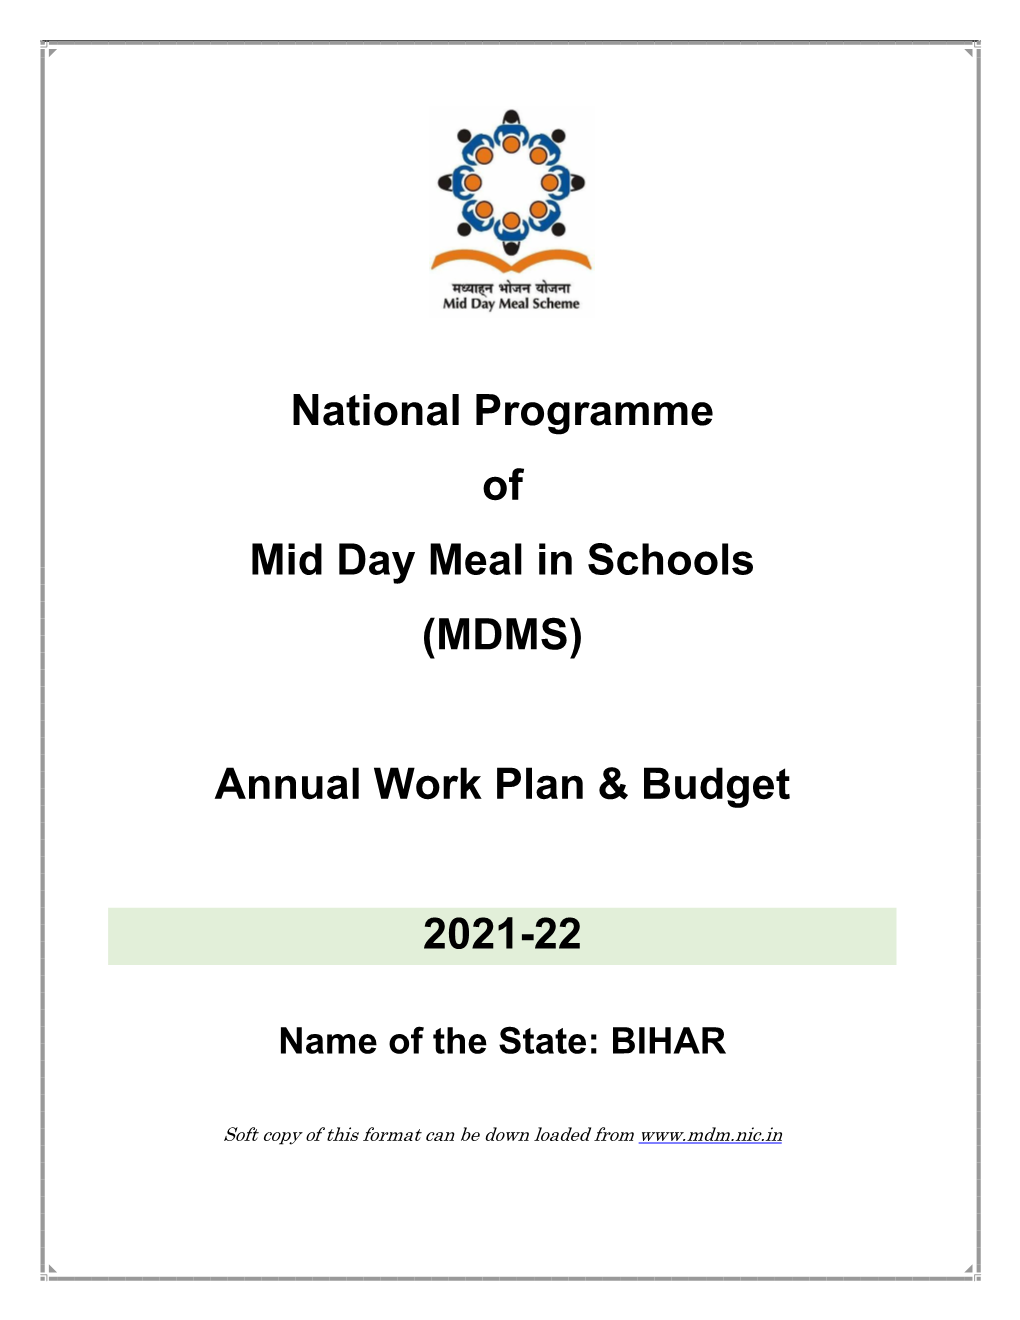 Annual Work Plan & Budget 2021-22